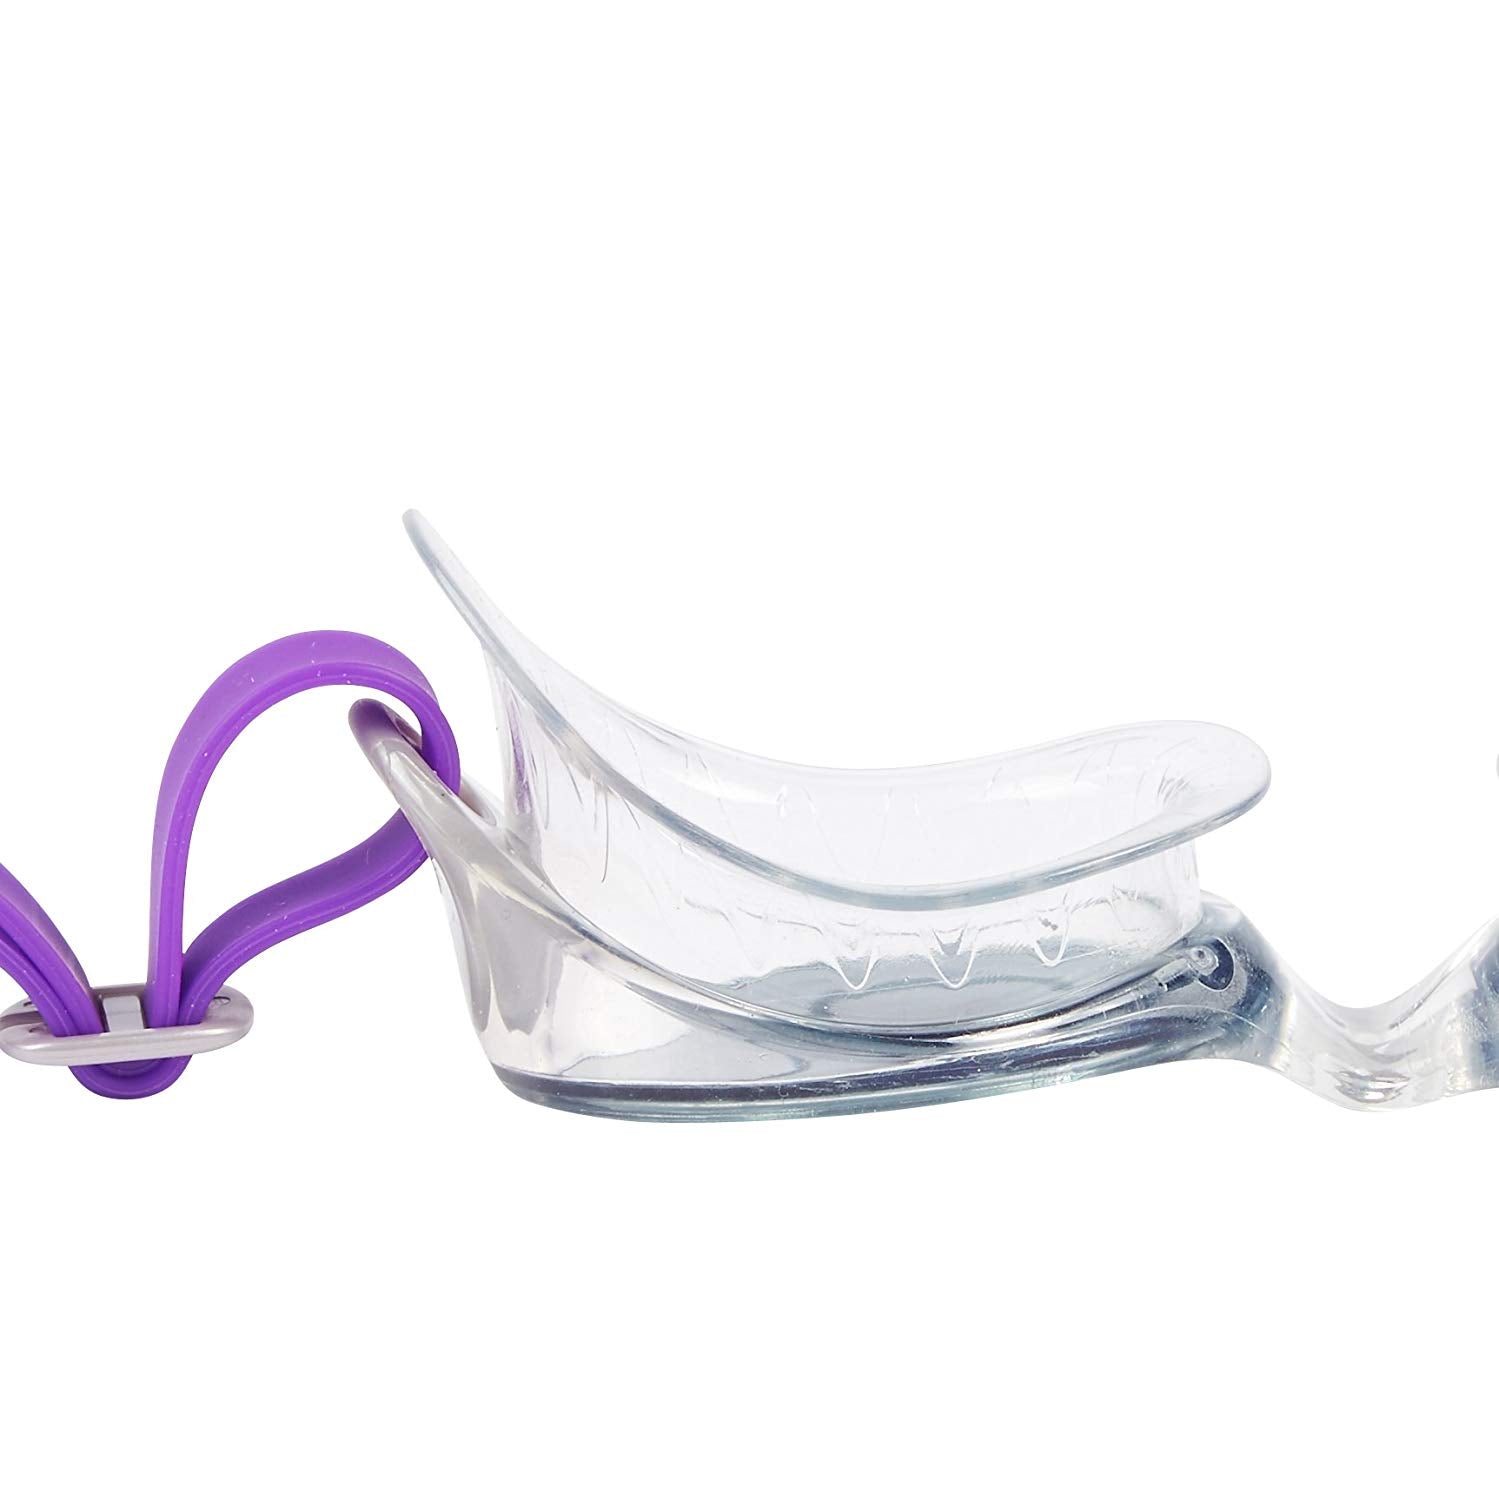 Speedo Female-Adult Futura Classic Female Goggles (Purple/Smoke) - Best Price online Prokicksports.com